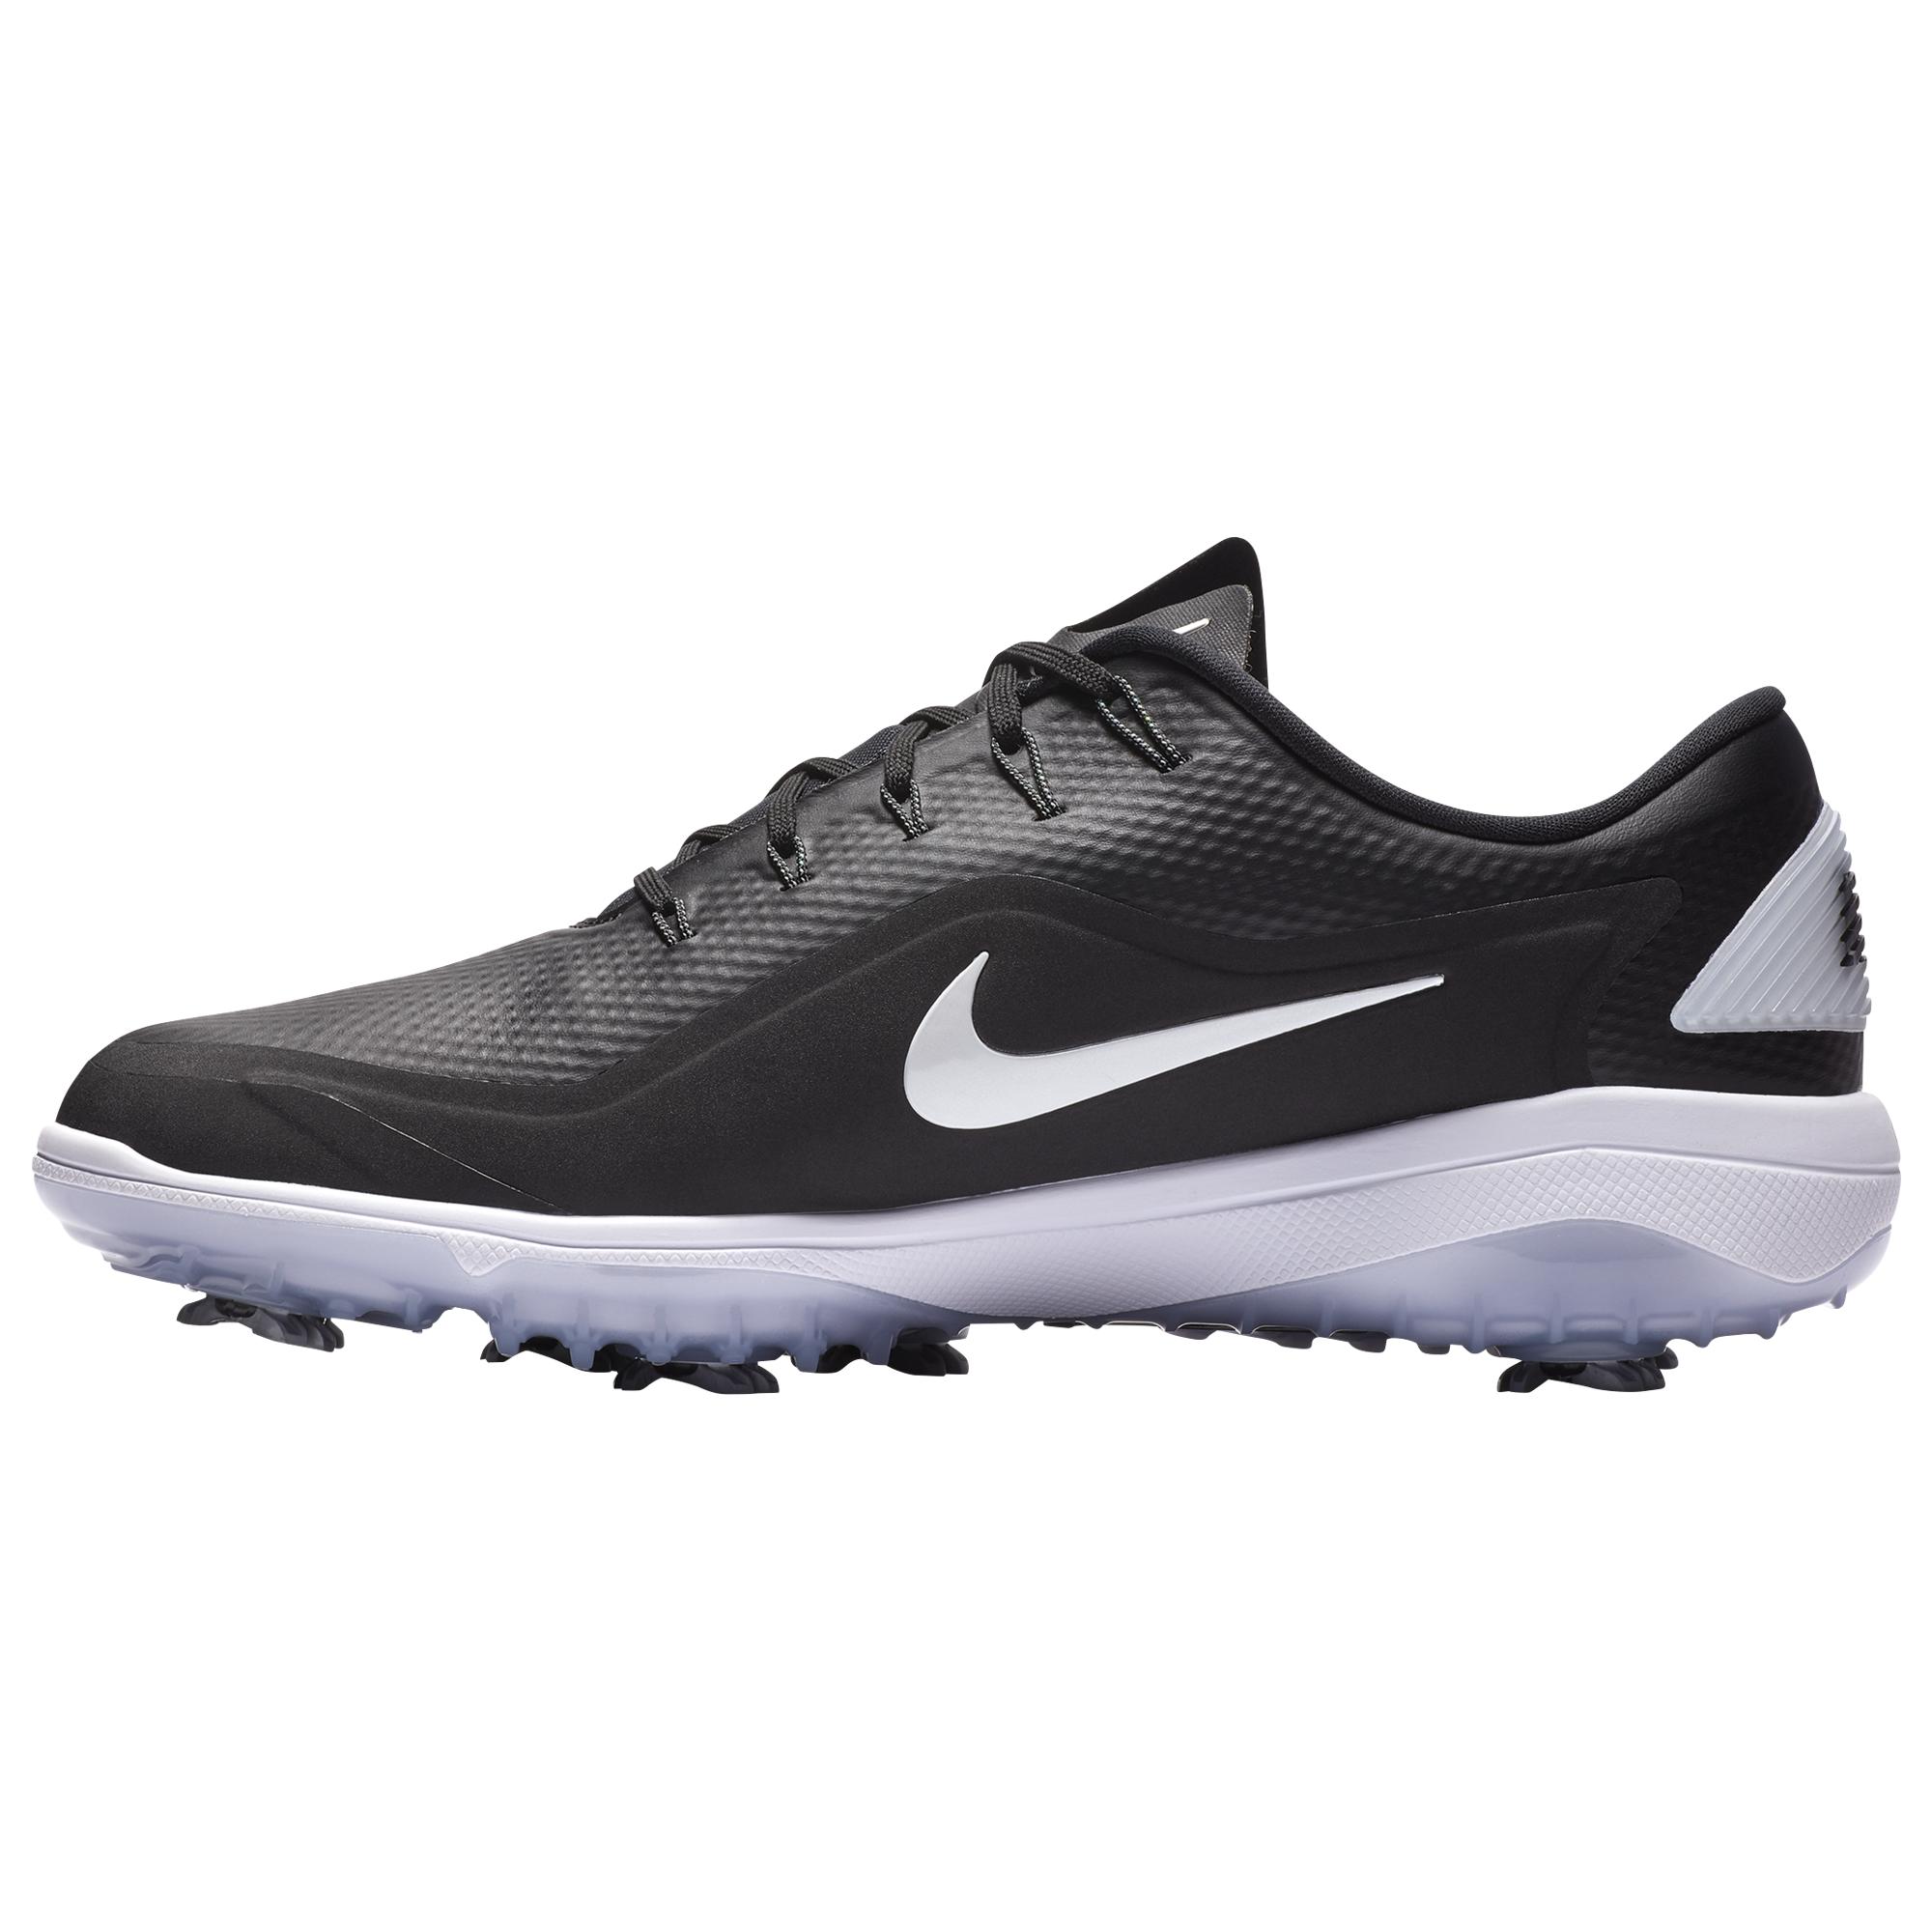 Nike React Vapor 2 Coated-mesh Golf Shoes in Black for Men - Lyst